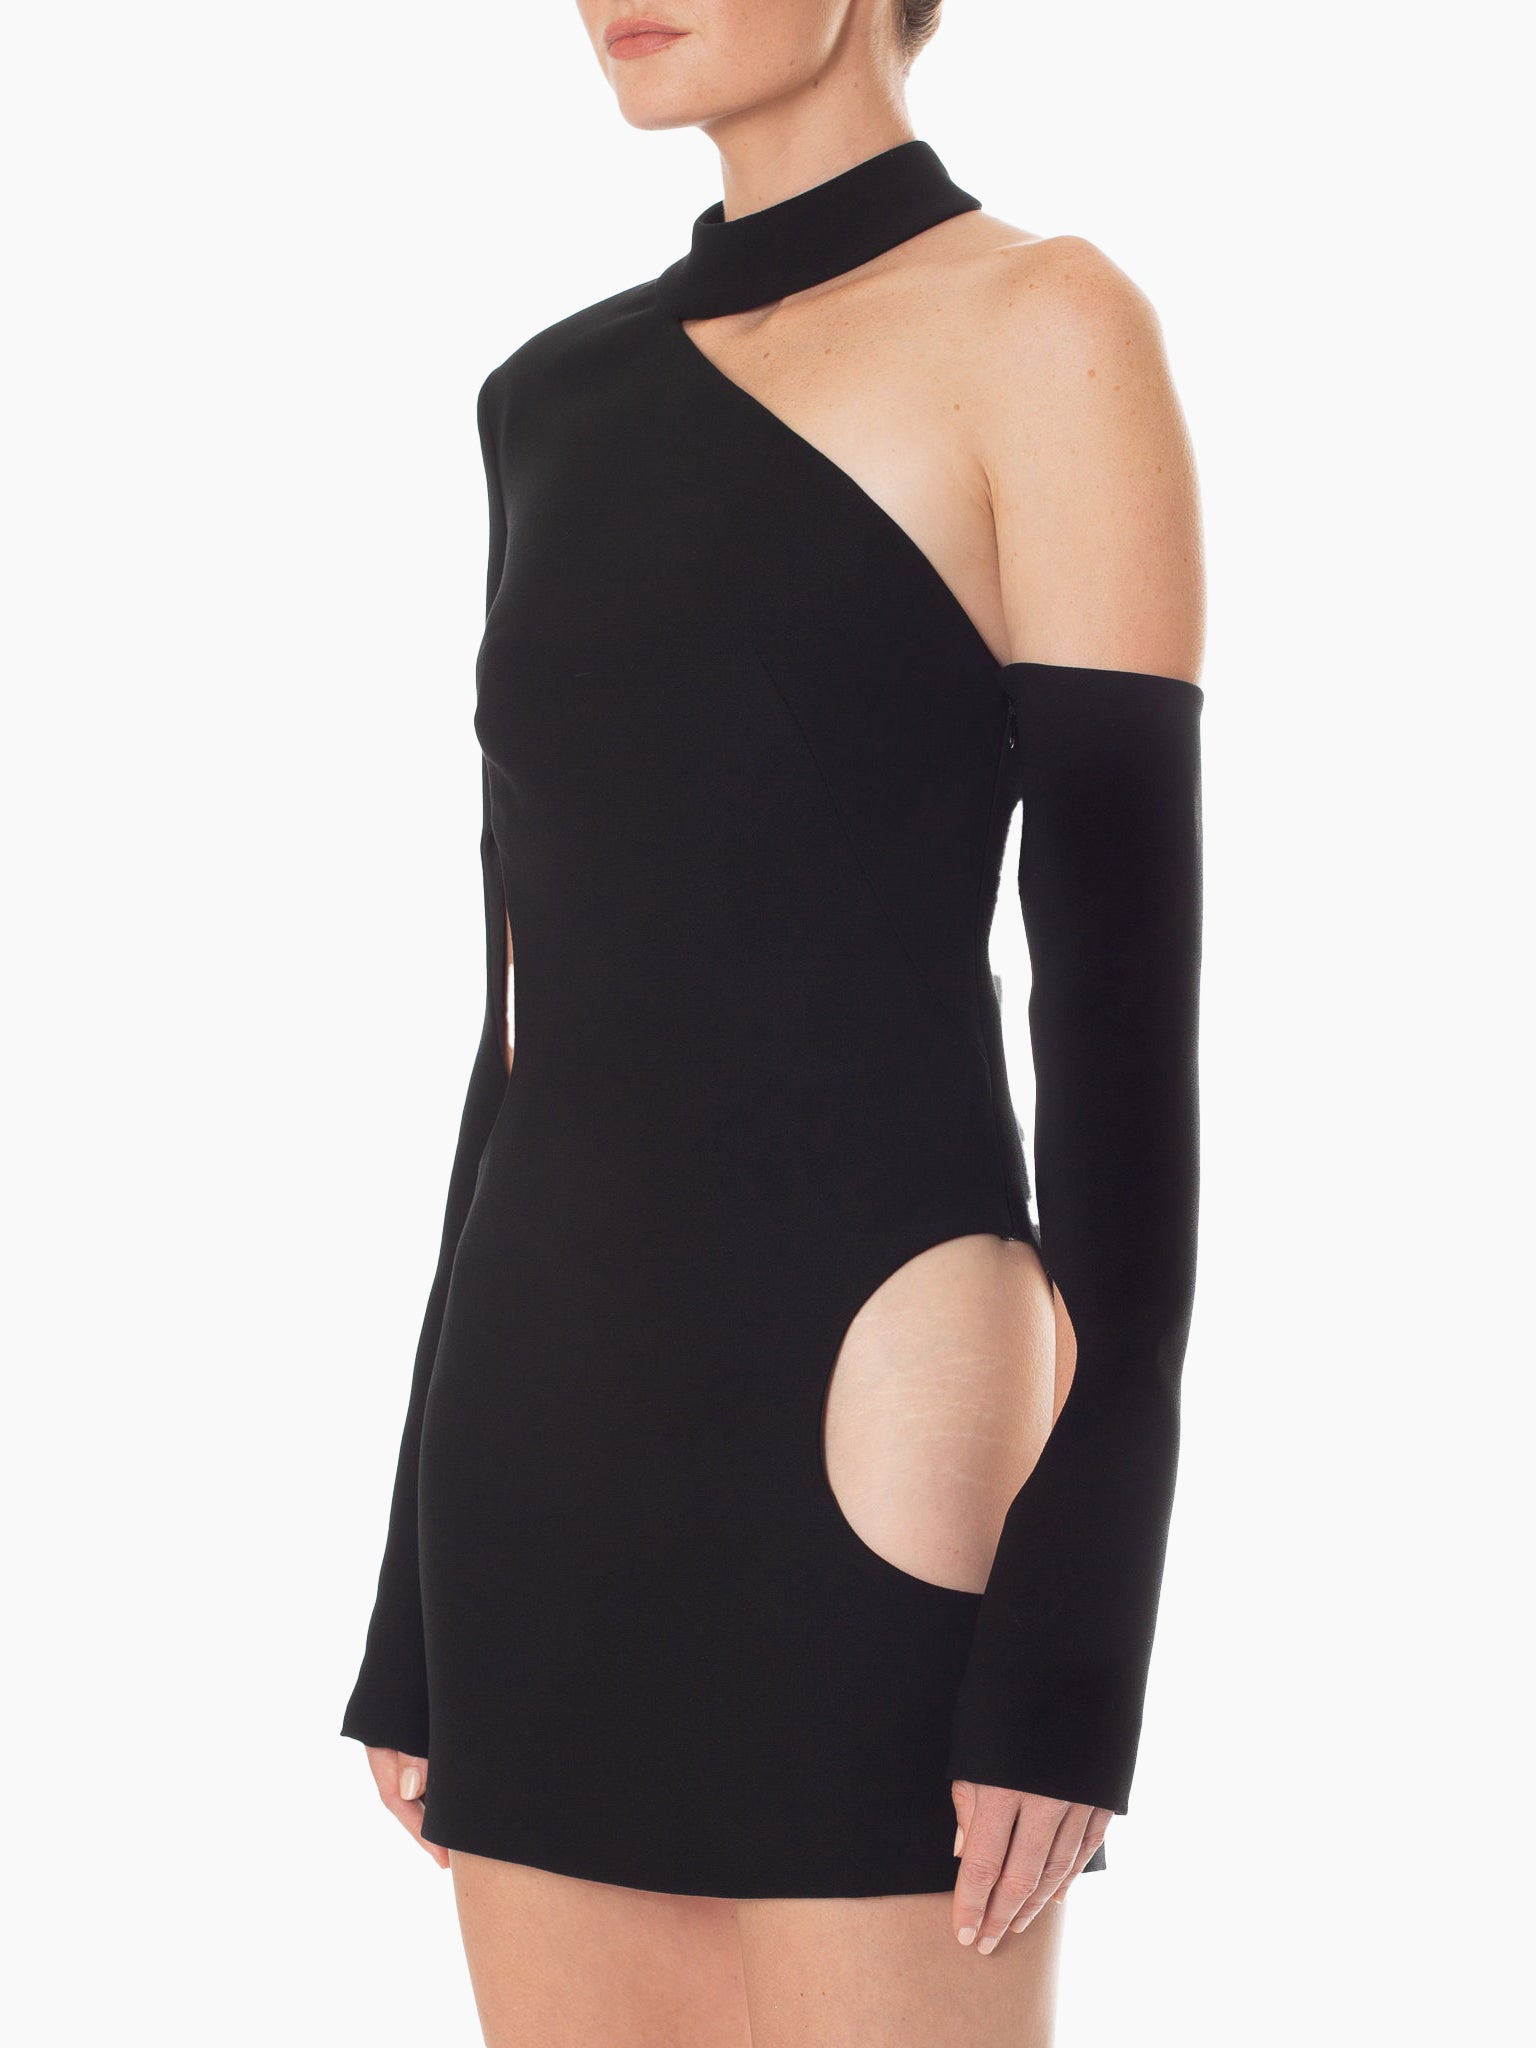 Shape Black One Shoulder Cut Out Bodycon Dress | PrettyLittleThing